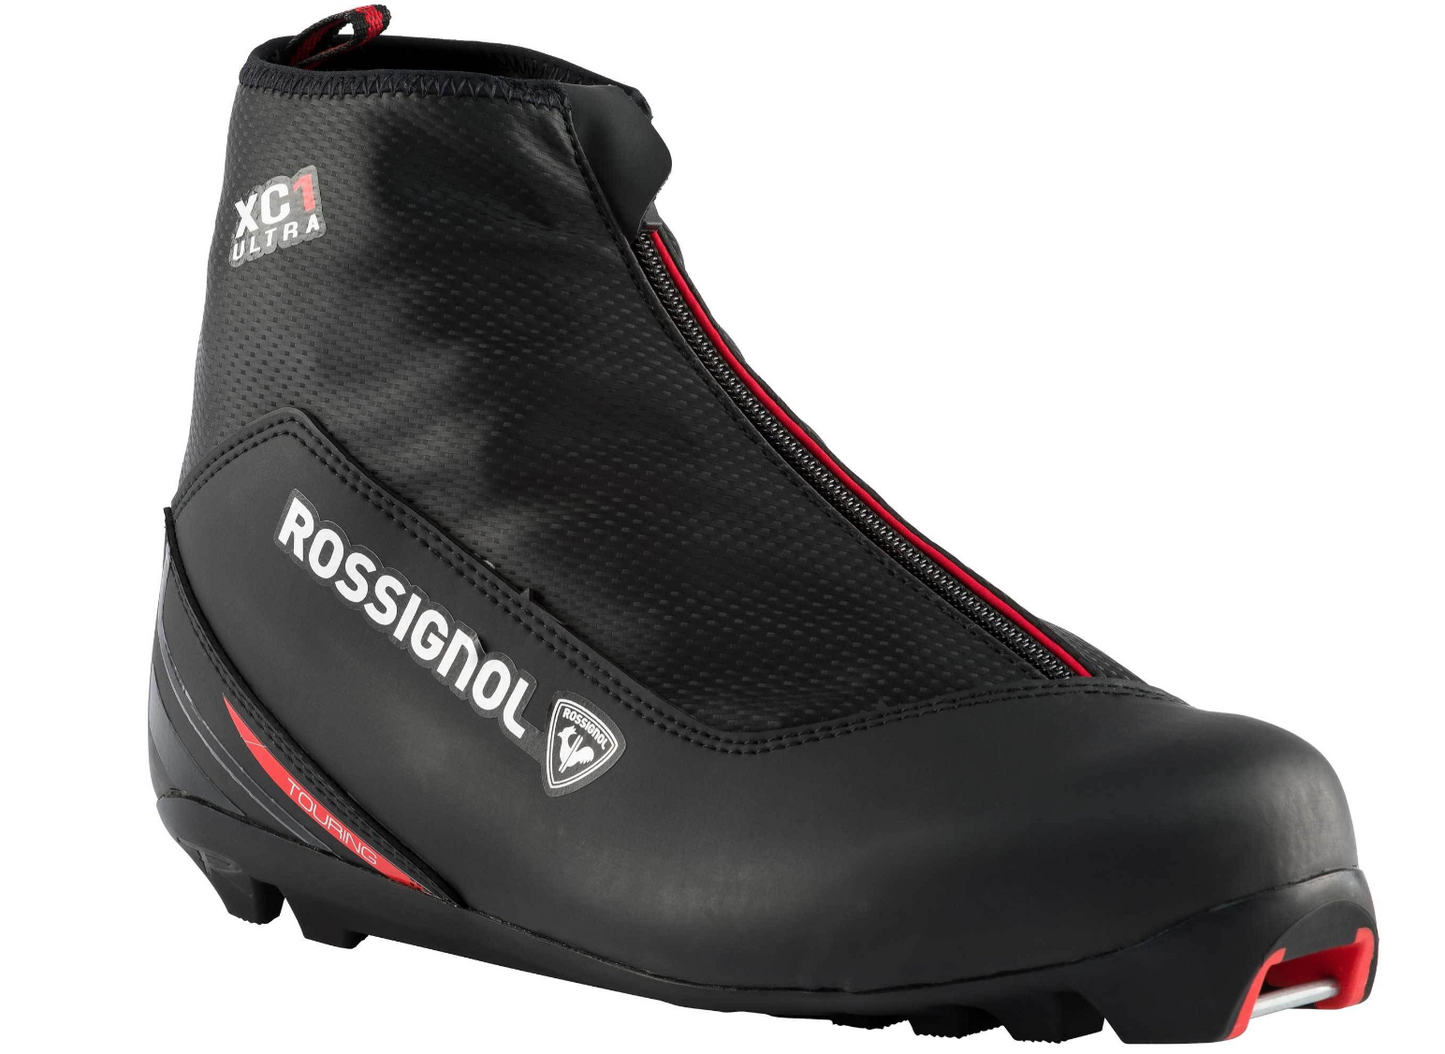 Rossignol X-1 Ultra Touring Nordic Ski Boot